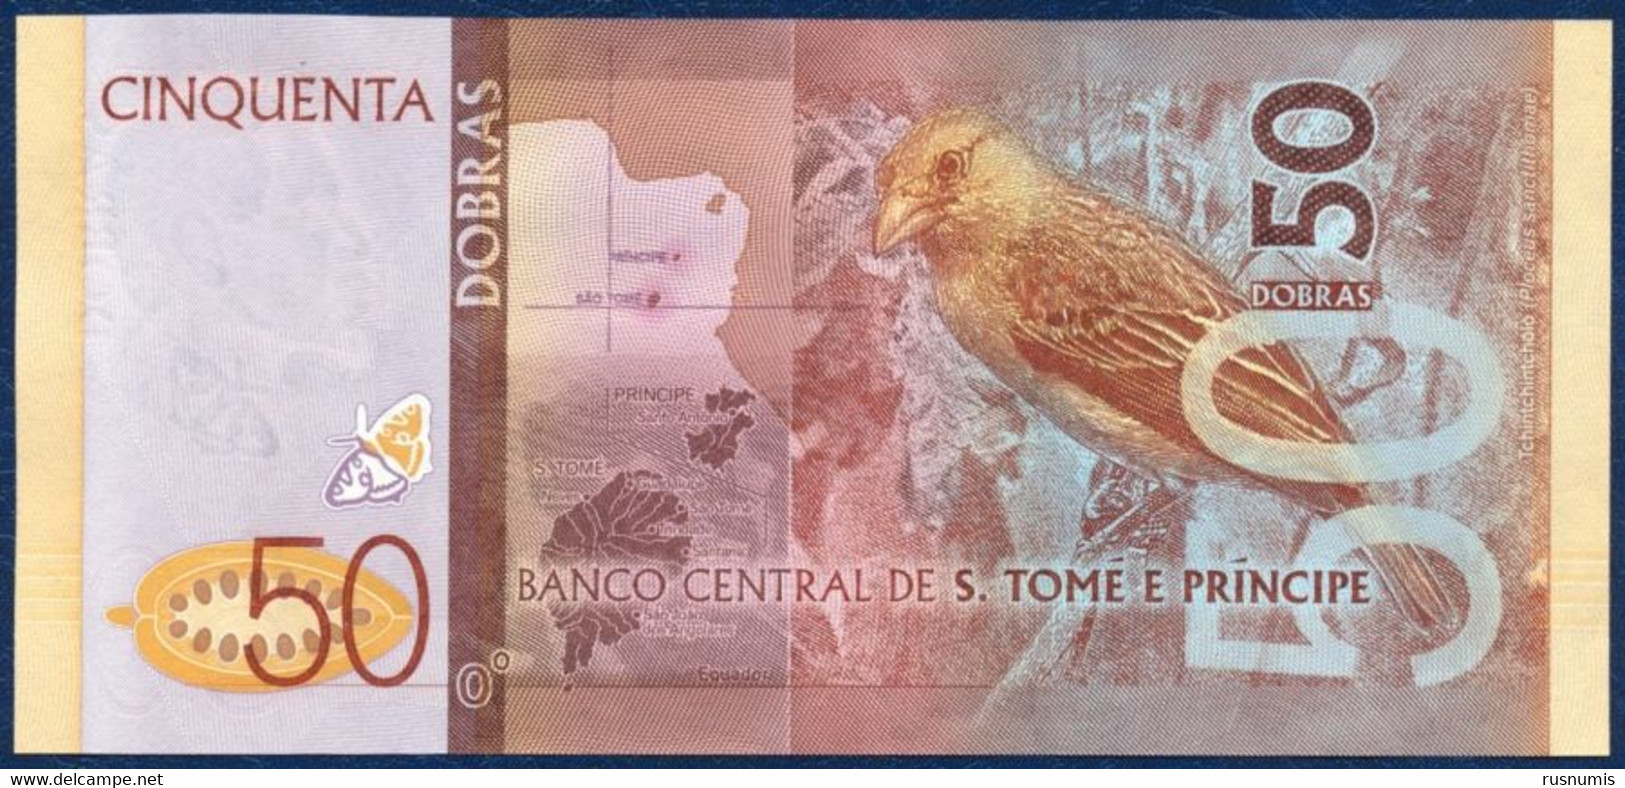 SAN TOME - SAO TOME AND PRINCIPE - ST. THOMAS 50 DOBRAS PICK-73 BUTTERFLY BIRD 2016 UNC - Sao Tome En Principe